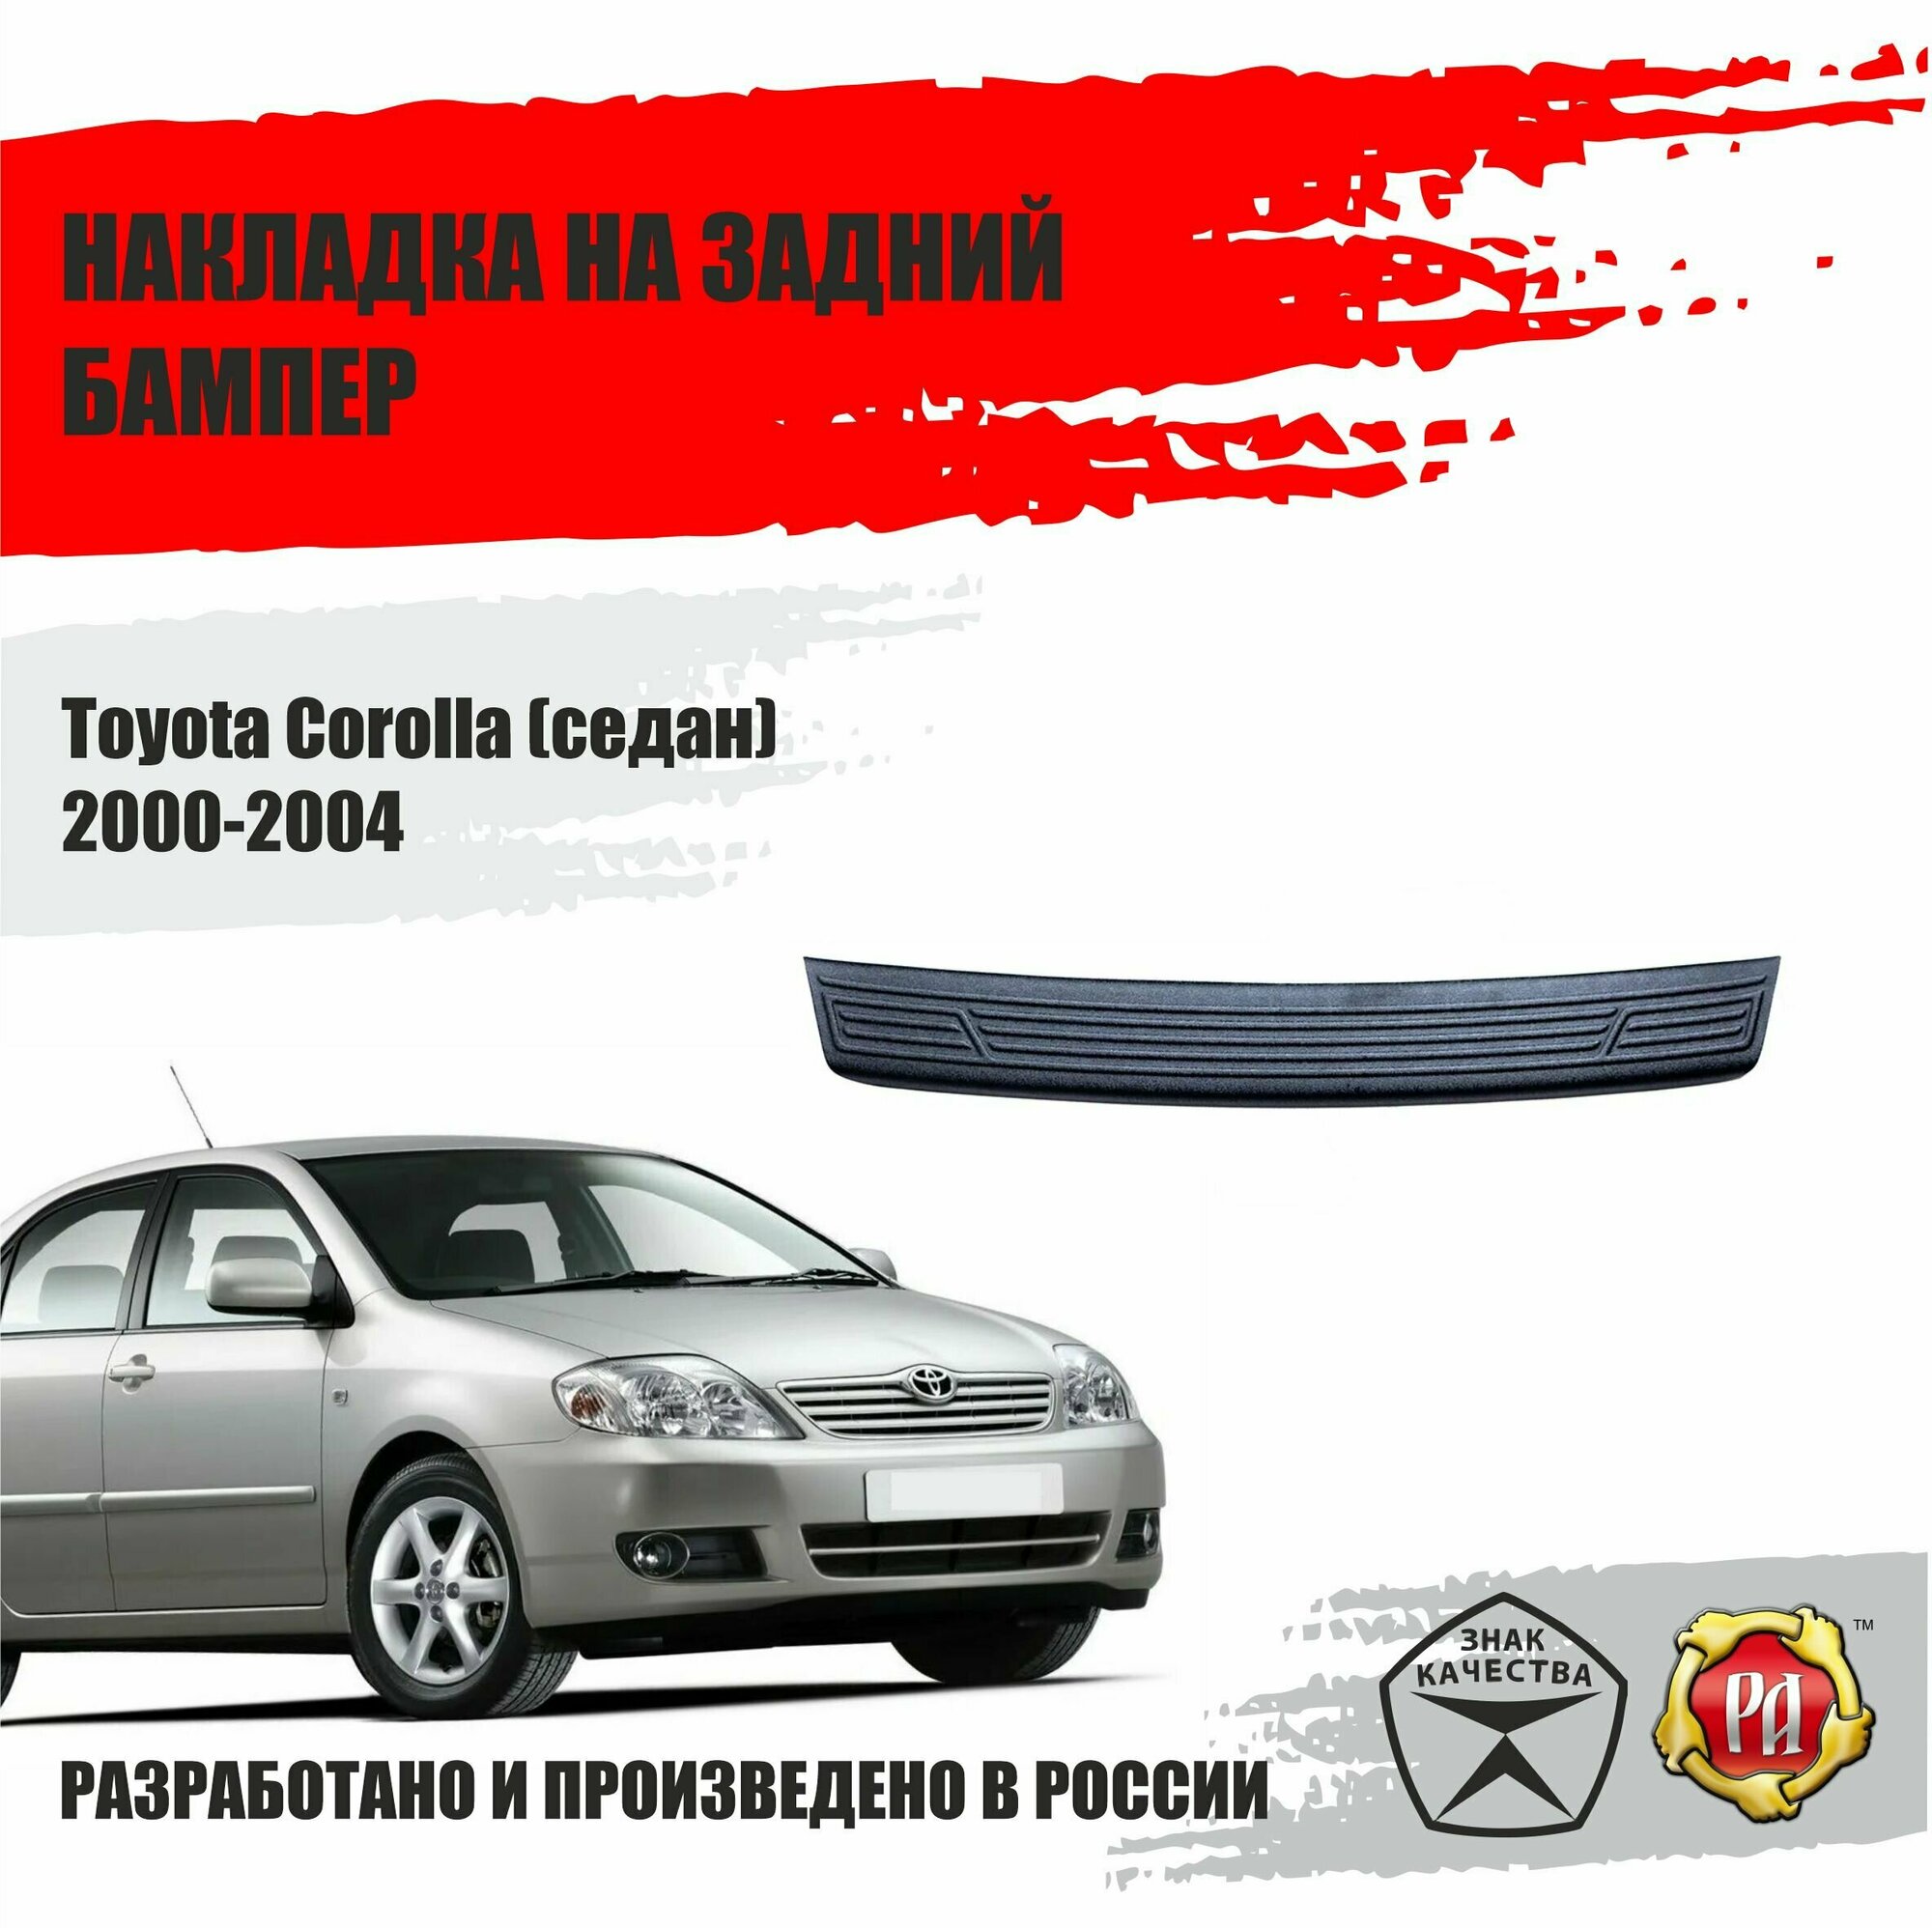 Накладка на задний бампер Русская Артель Toyota Corolla 2000-2004